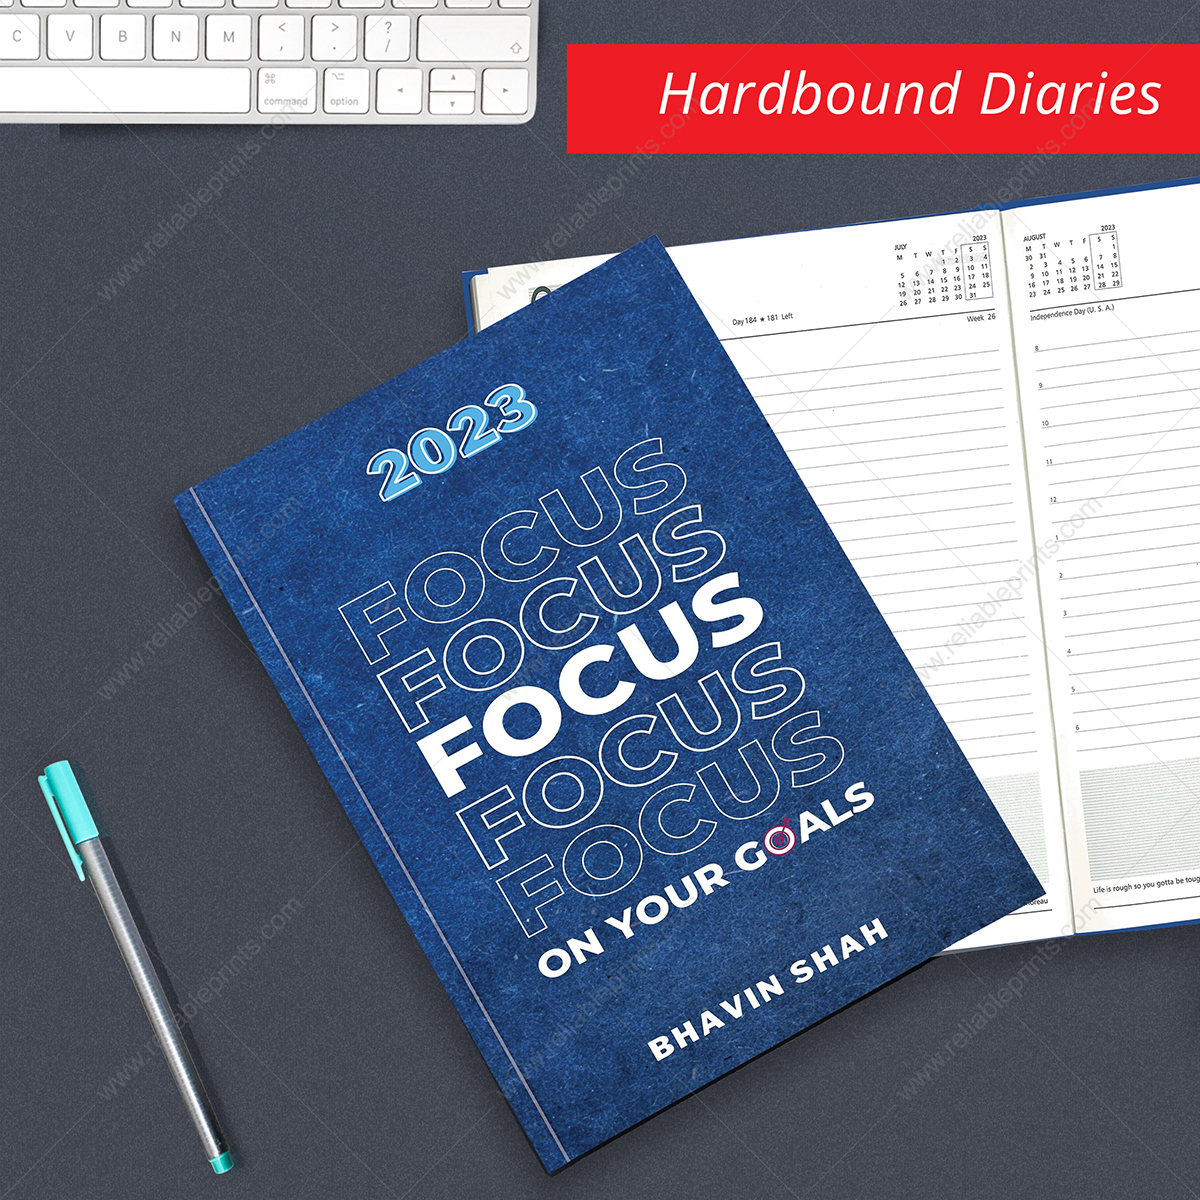 HardBound Diaries